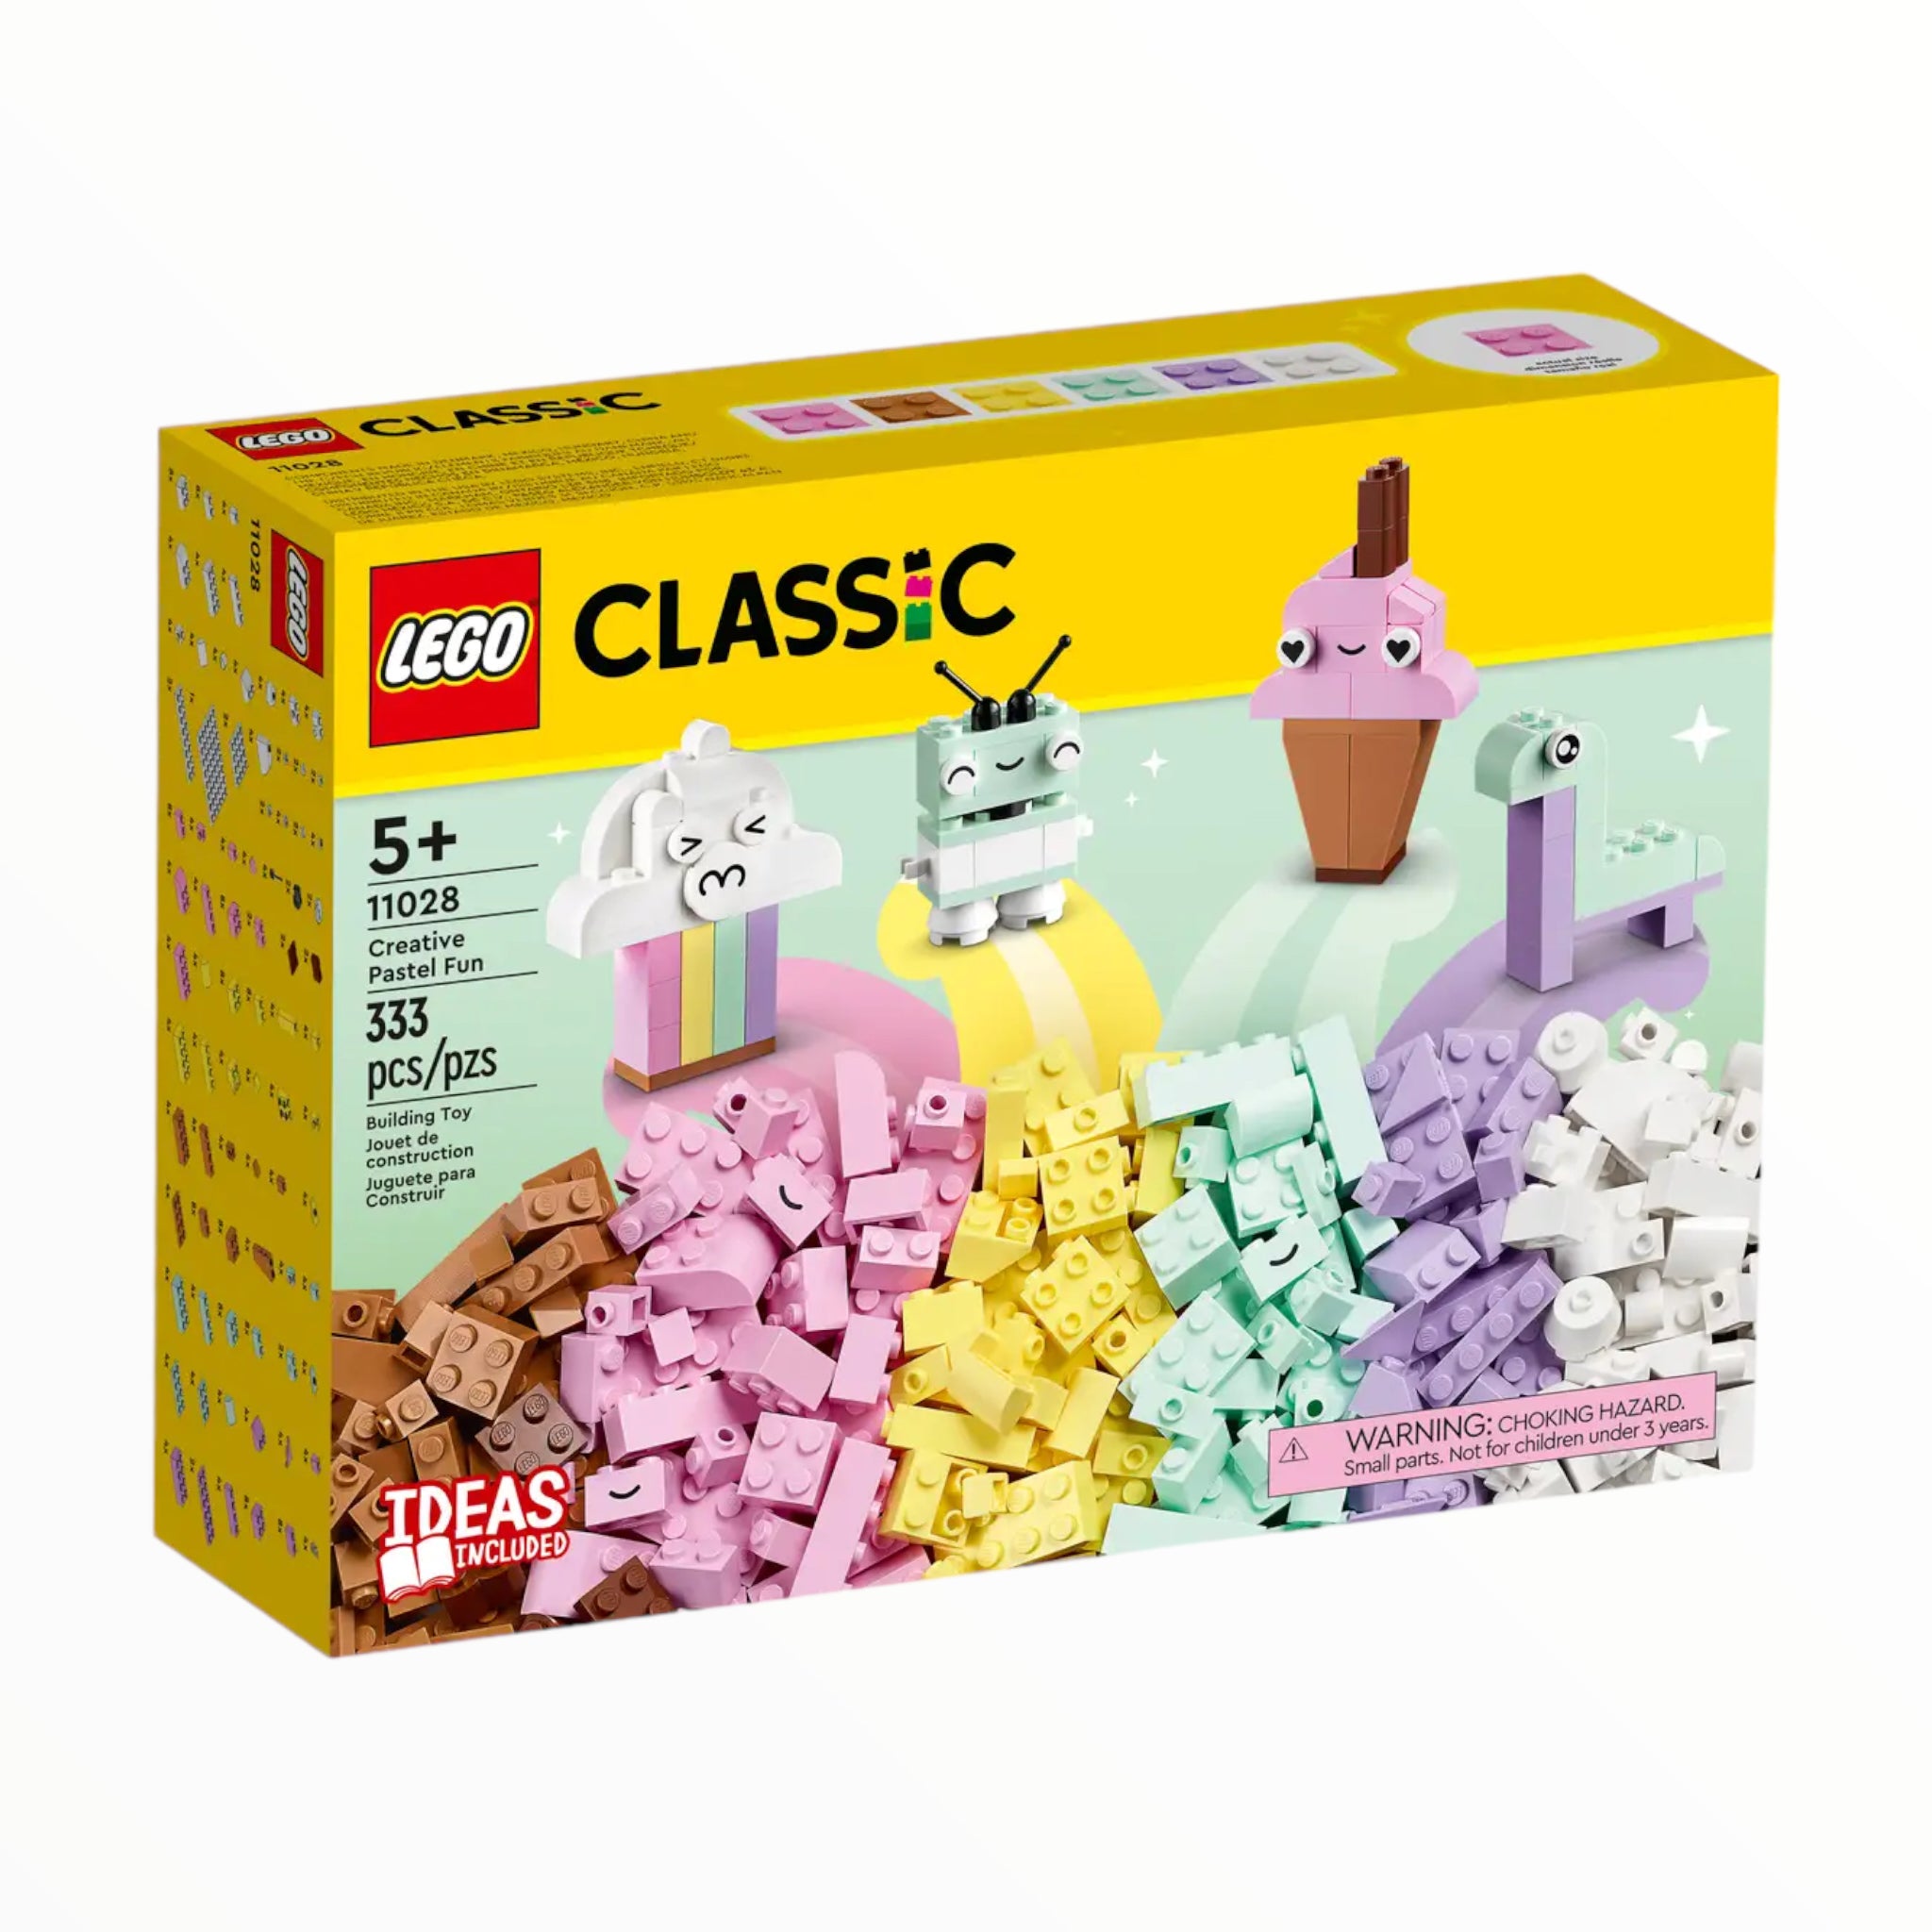 11028 Classic Creative Pastel Fun